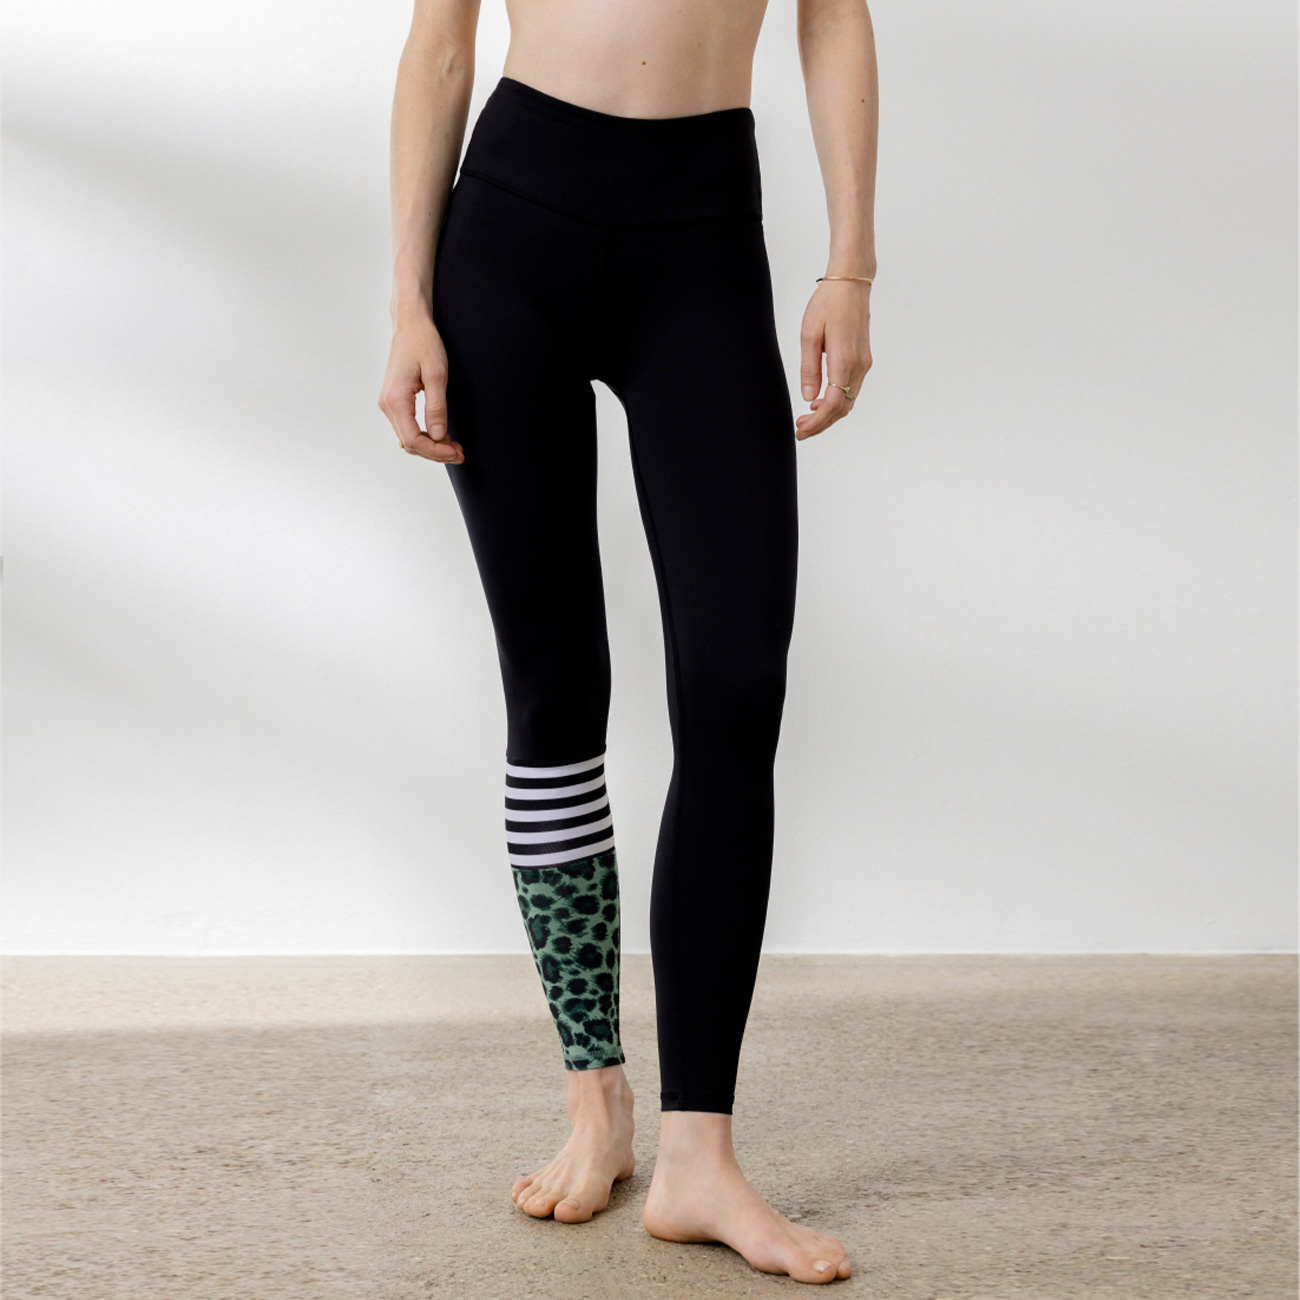 Leggings Surf Style - Leo Jade, Women's apparel Offer, SALE